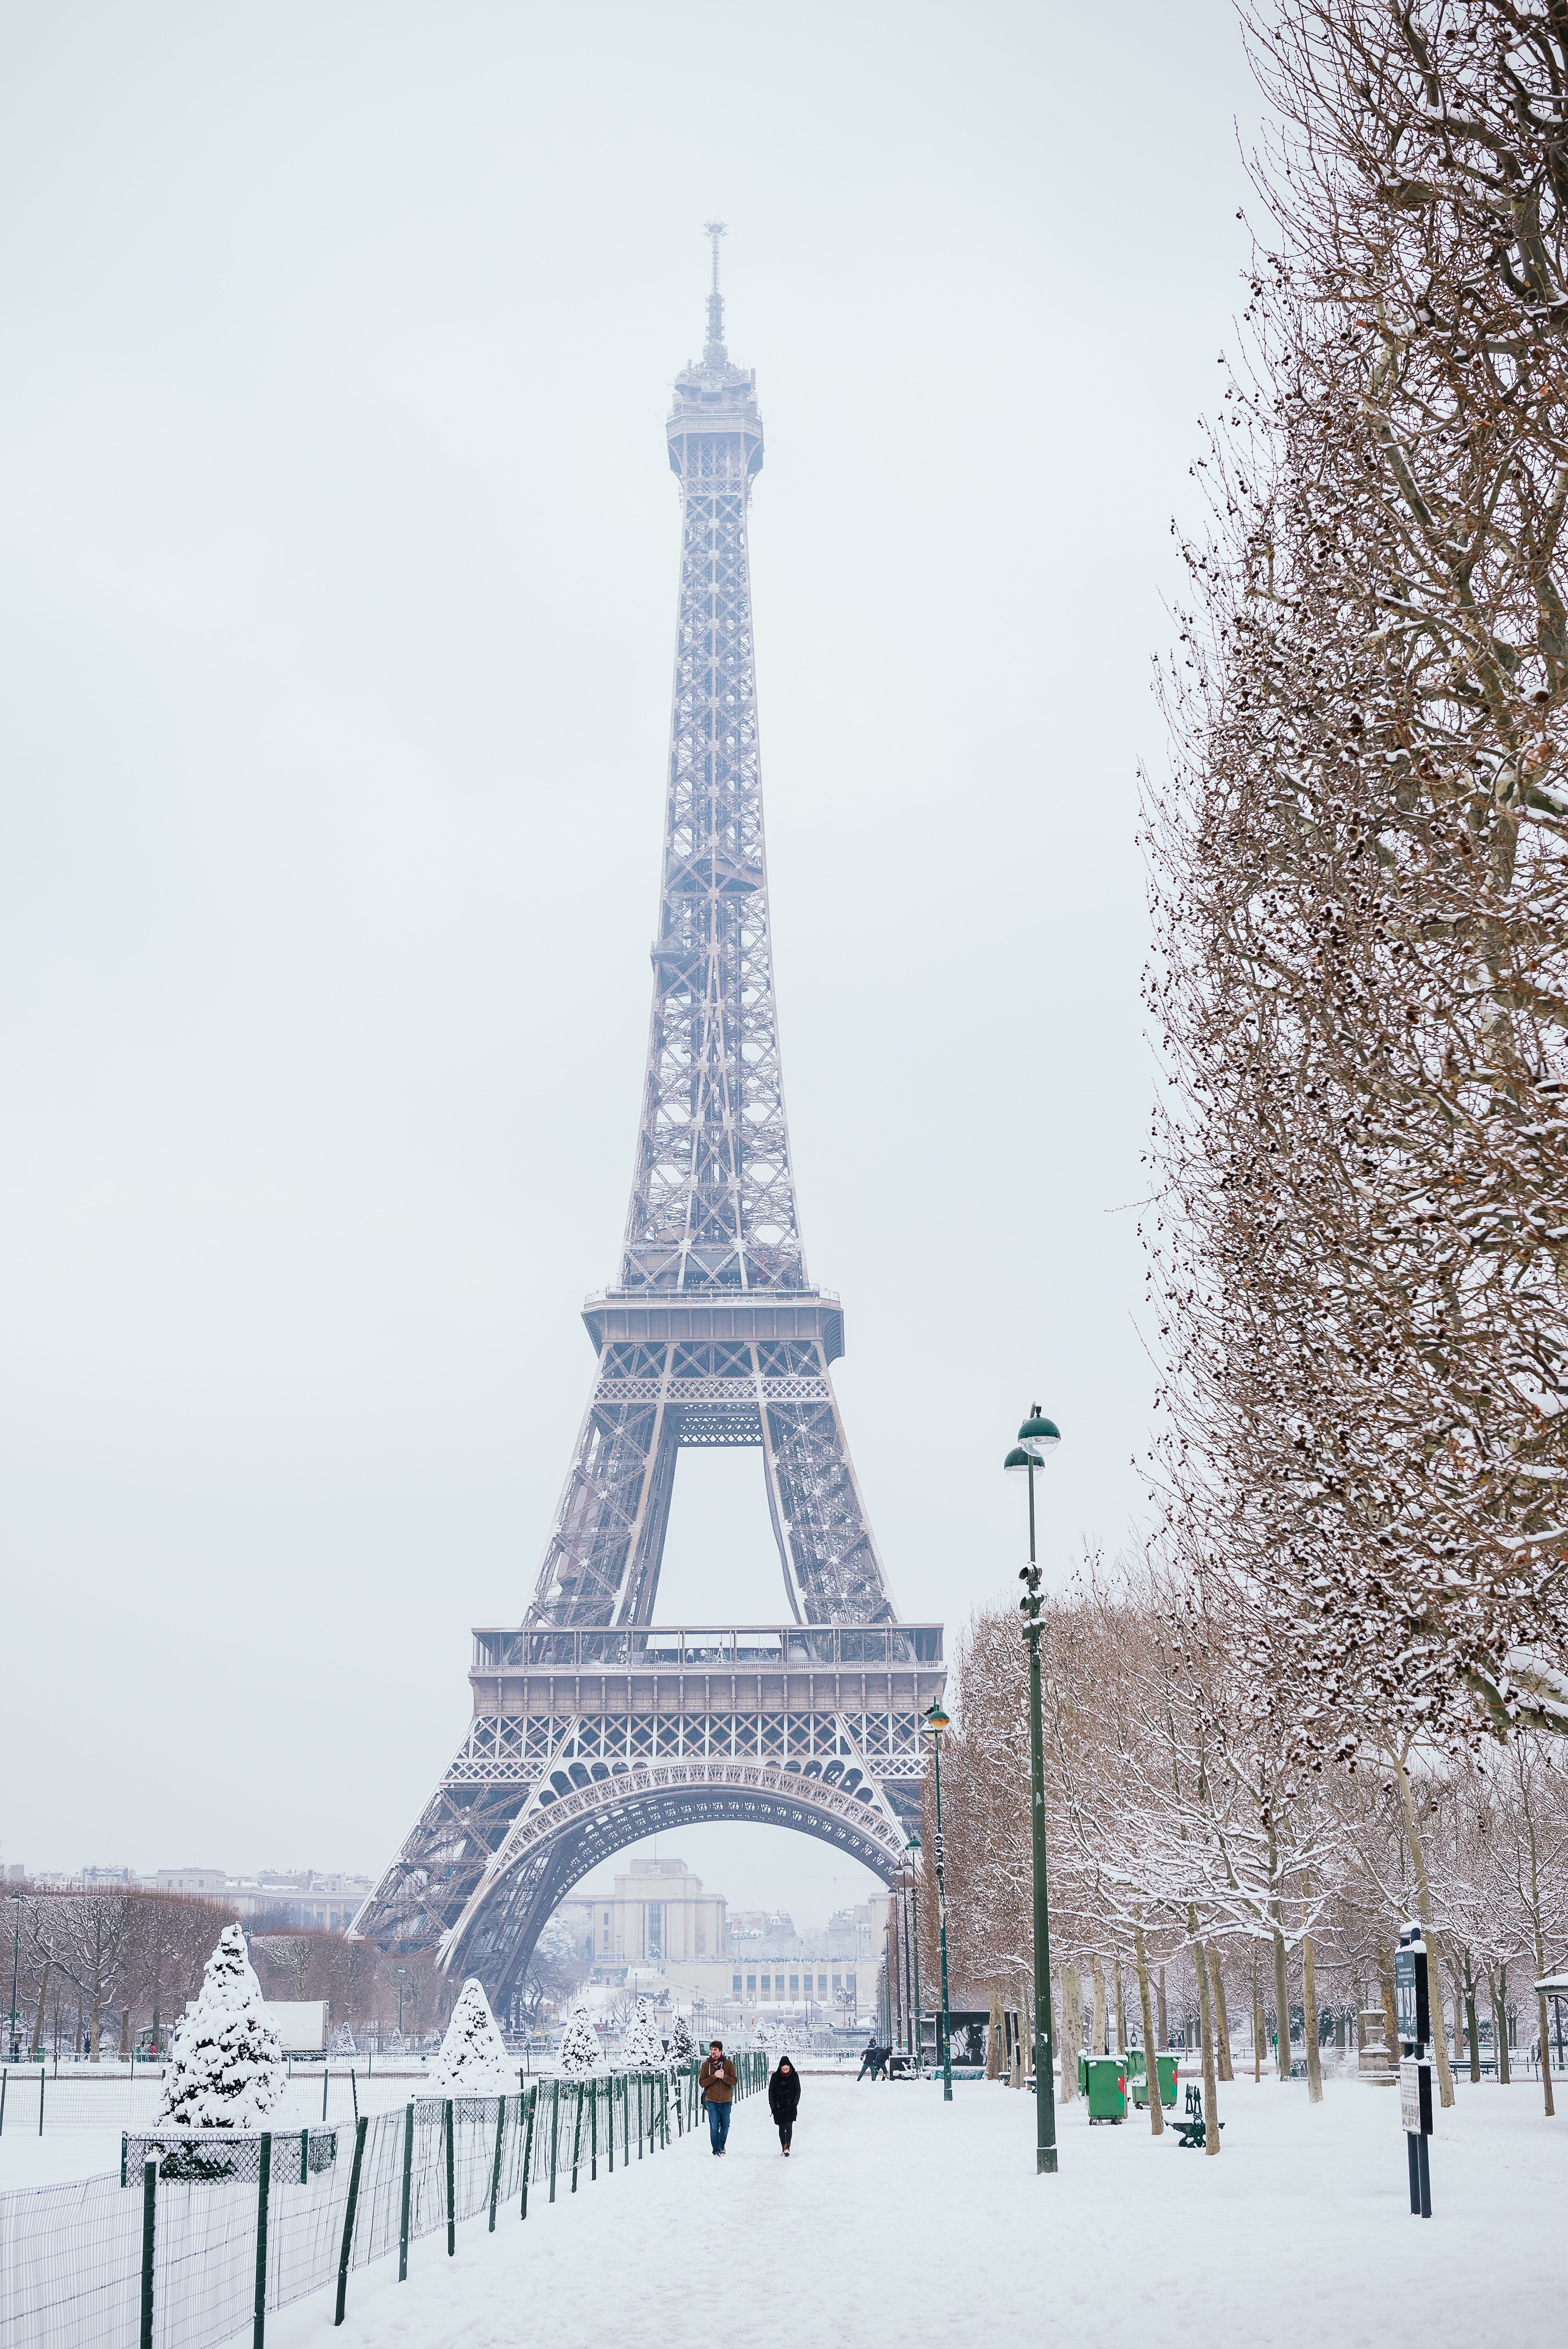 Snow white blanket in Paris at the Eiffel Tower. #theparisphotographer # paris #parisphotographer #winter #sn. Paris wallpaper, Paris picture, Christmas in paris